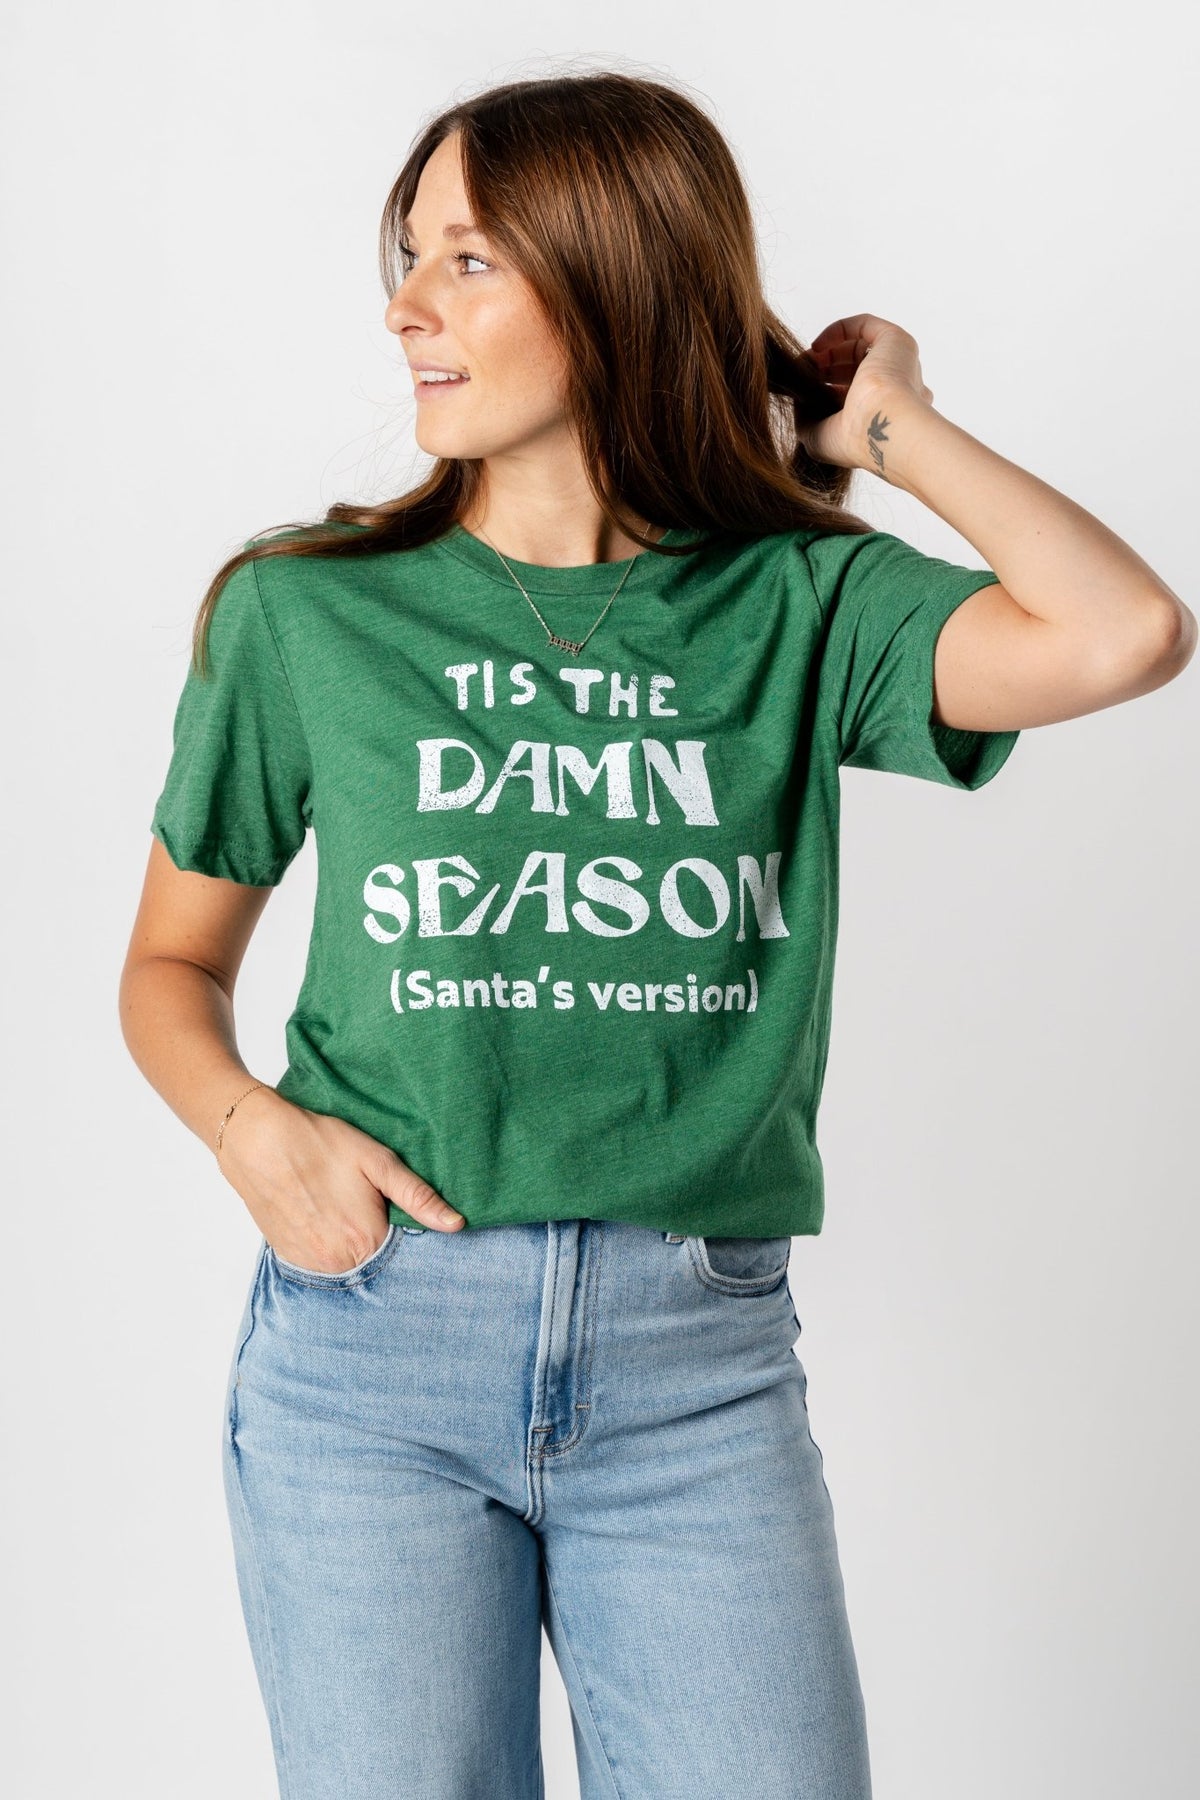 'Tis the damn season (Santa's Version) t-shirt green - Trendy Holiday Apparel at Lush Fashion Lounge Boutique in Oklahoma City